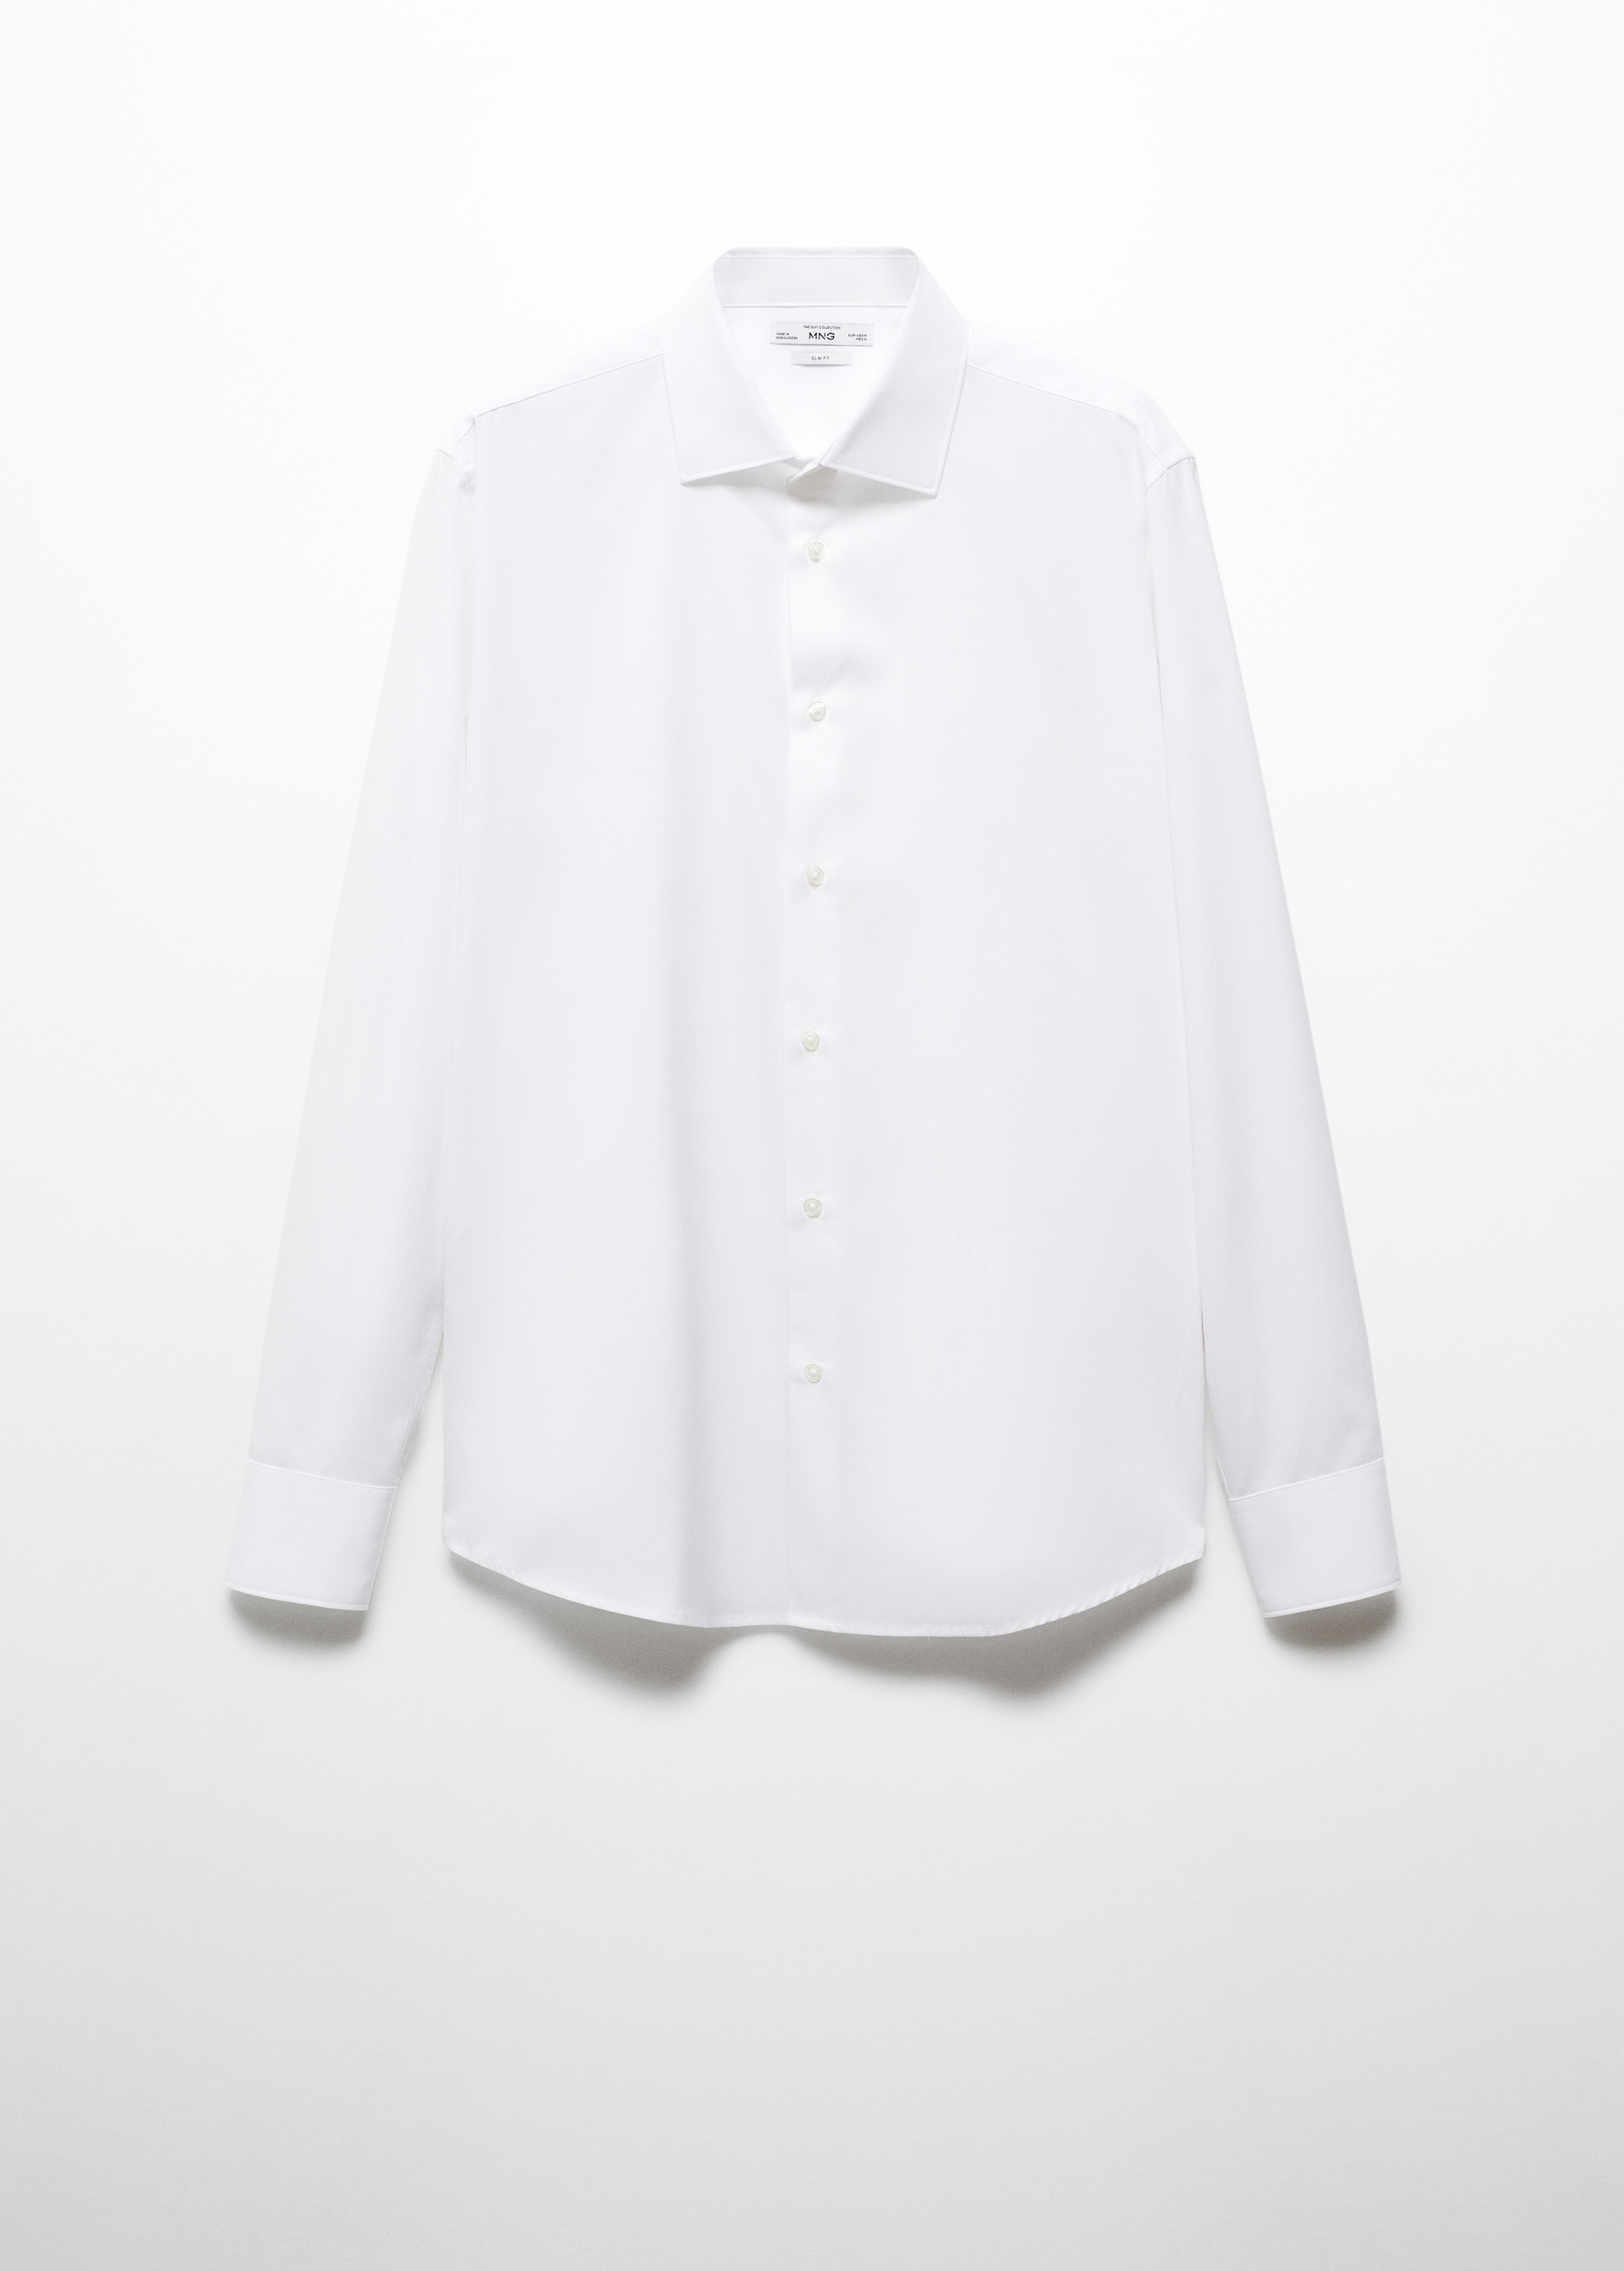 Camisa traje slim fit algodón popelín - Artículo sin modelo